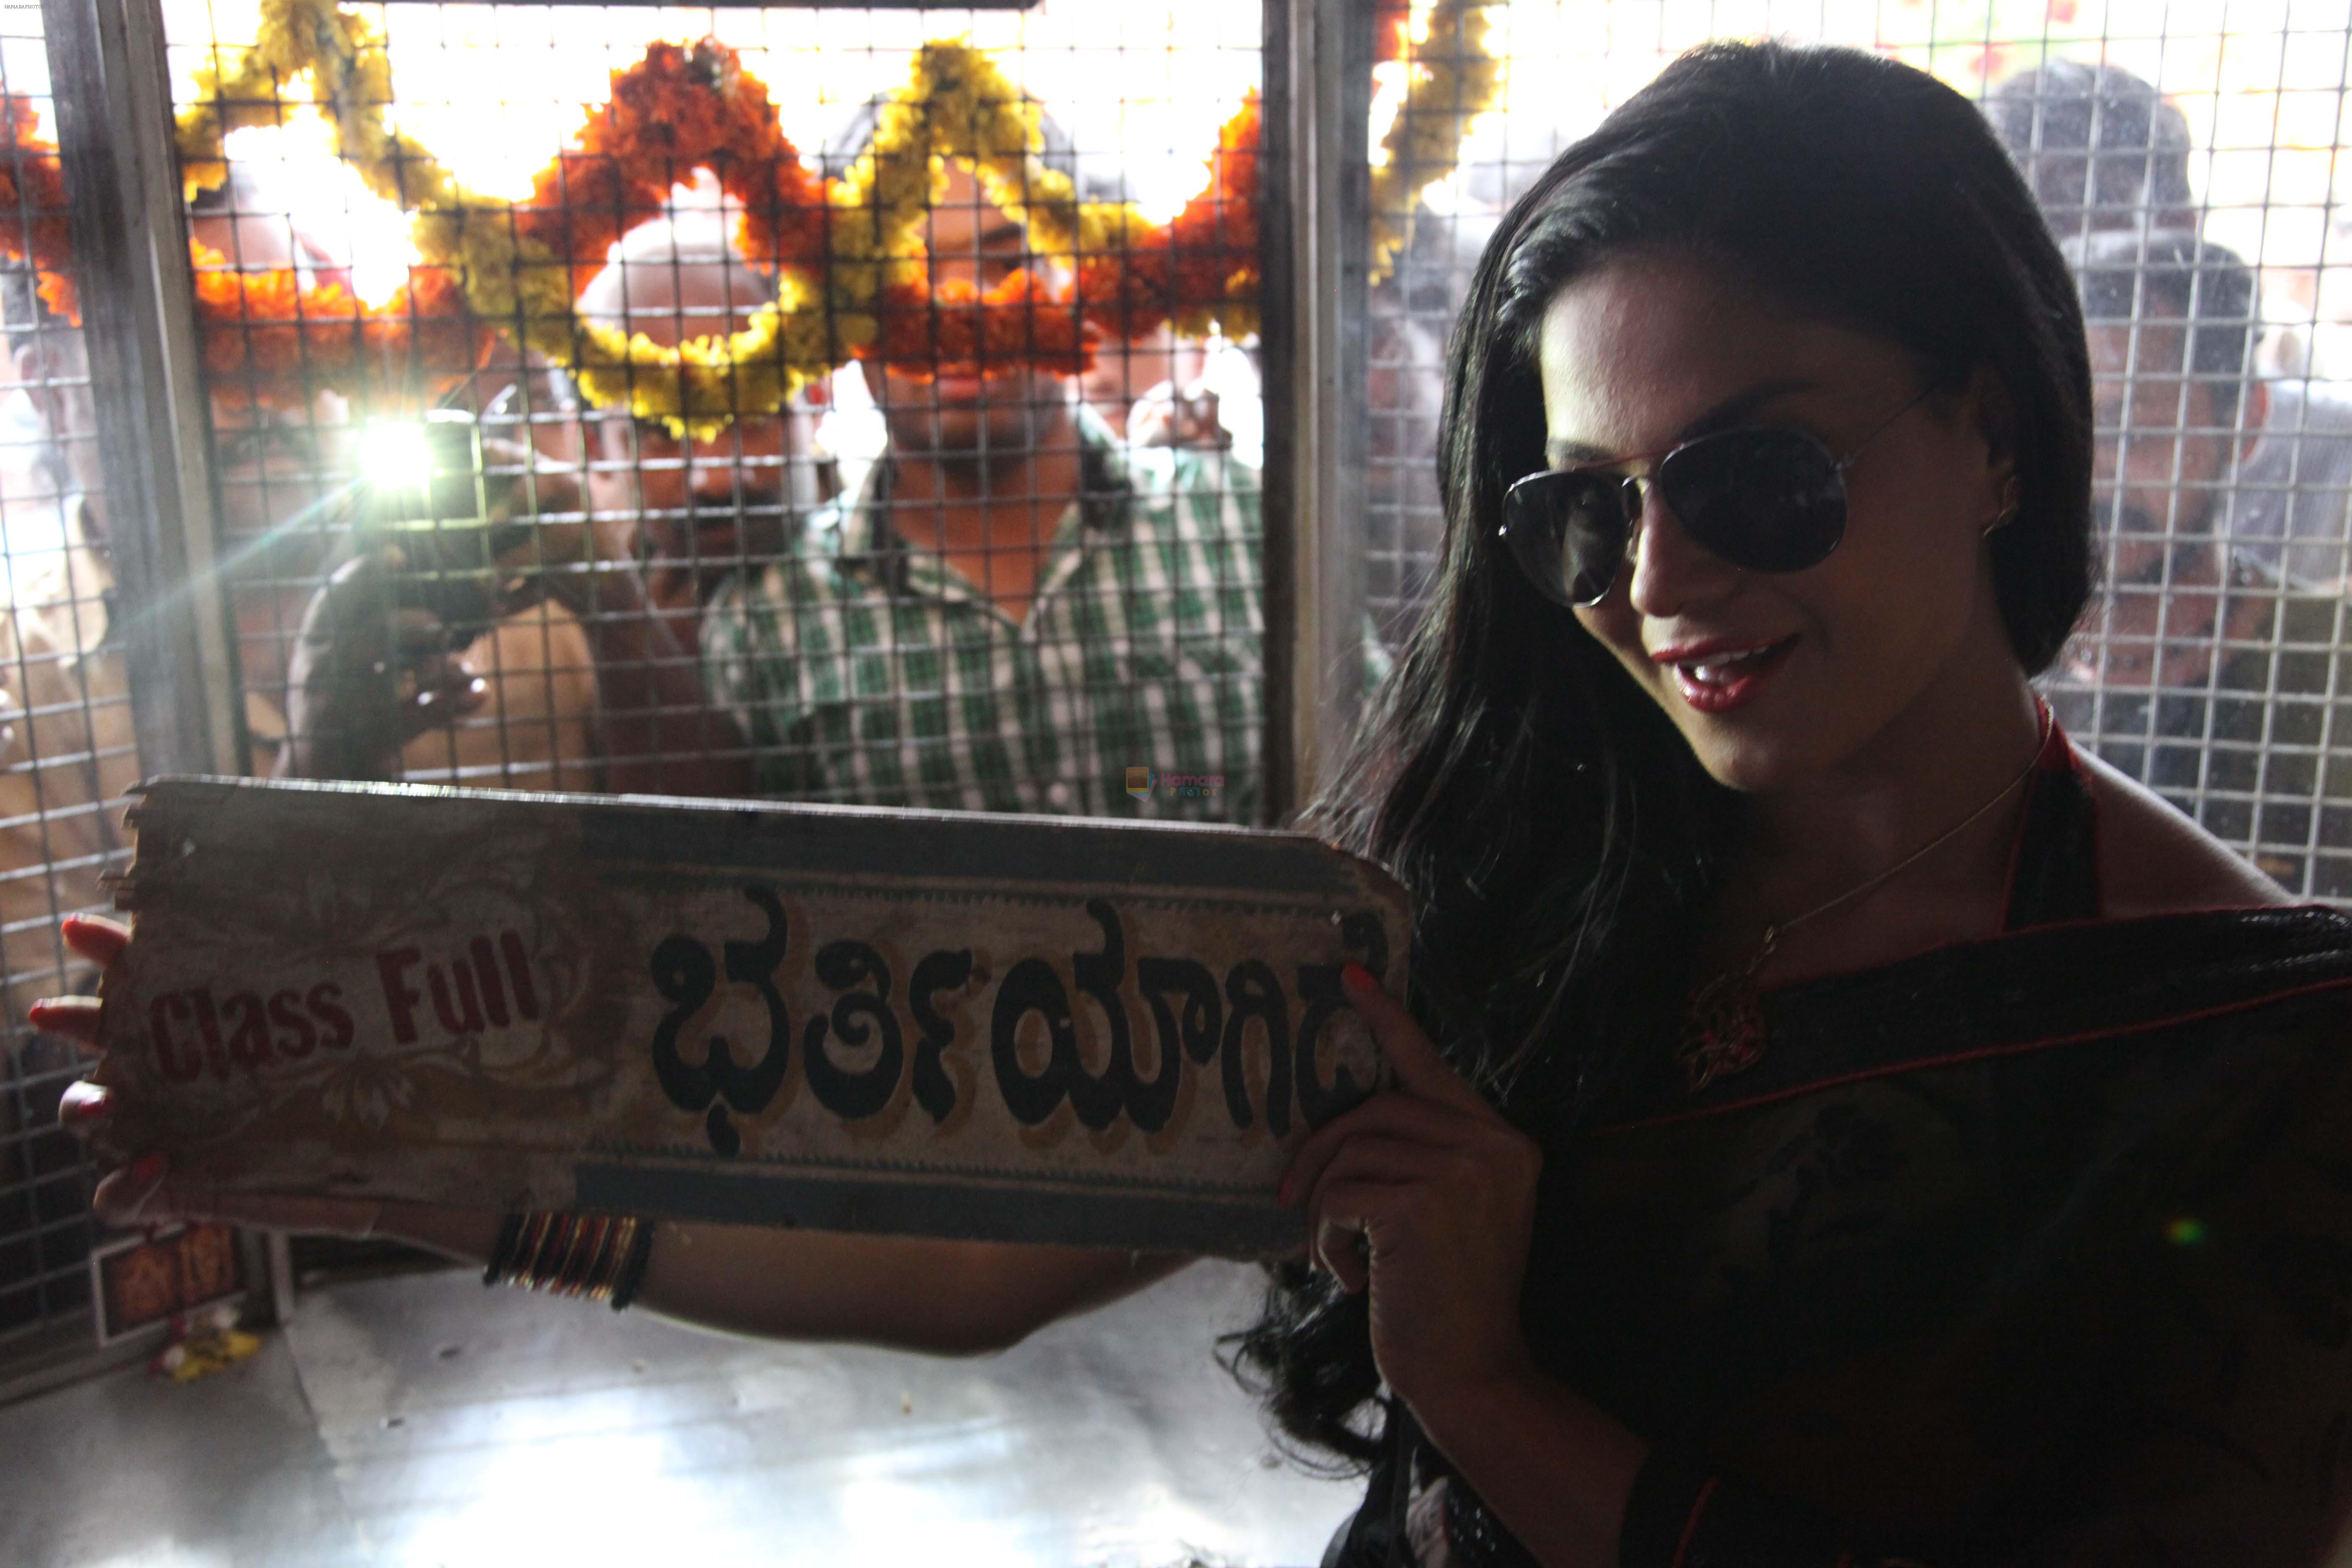 Veena Malik's Silk Sakkath Hot Maga movie tickets selling like hot cakes on 4th Aug 2013